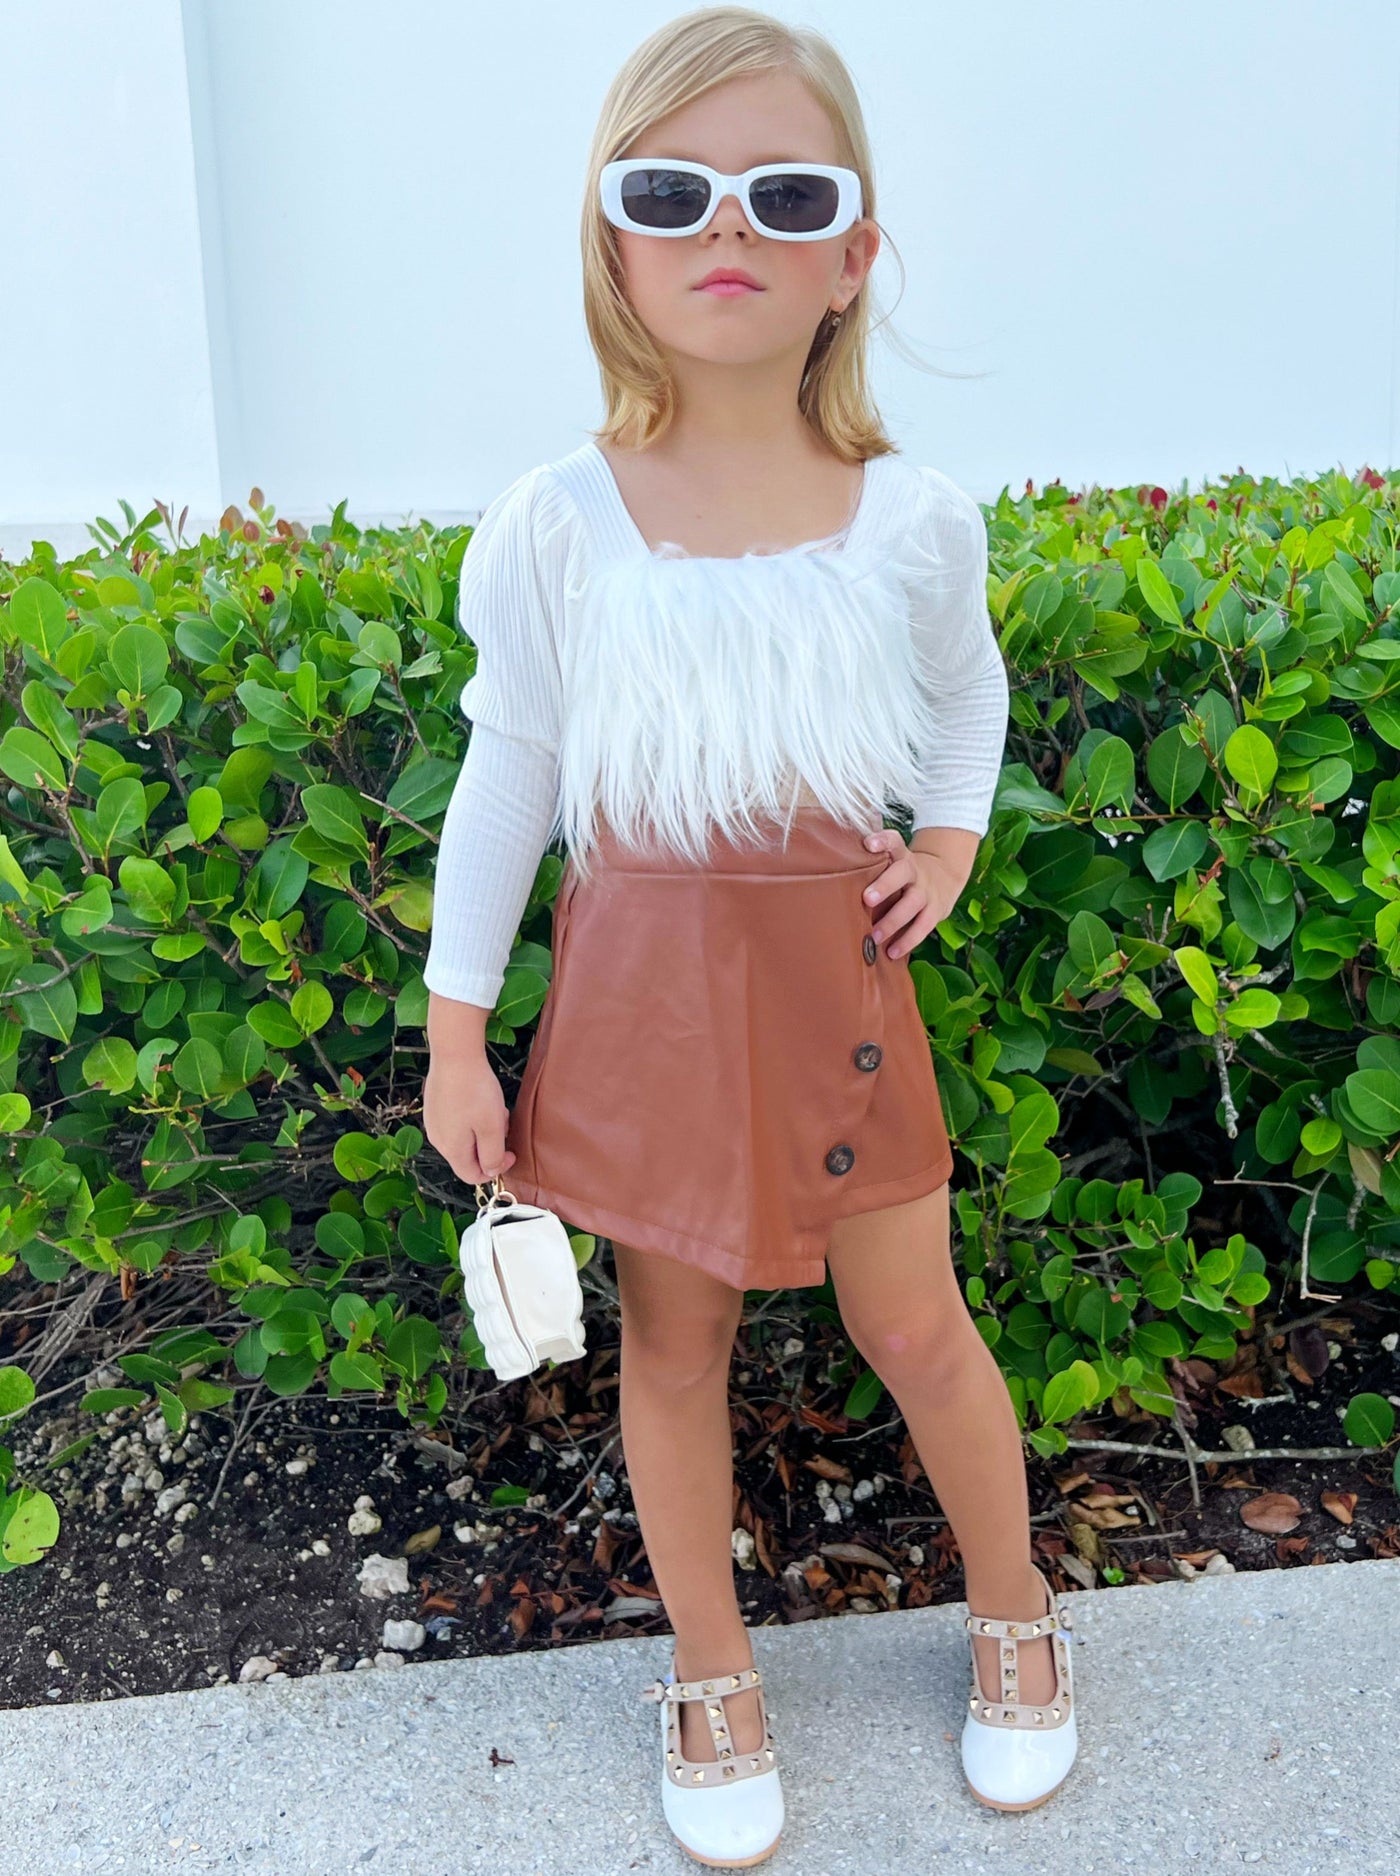 Toddler Everyday Fashion | Girls Furry Crop Top PU Leather Skort Set